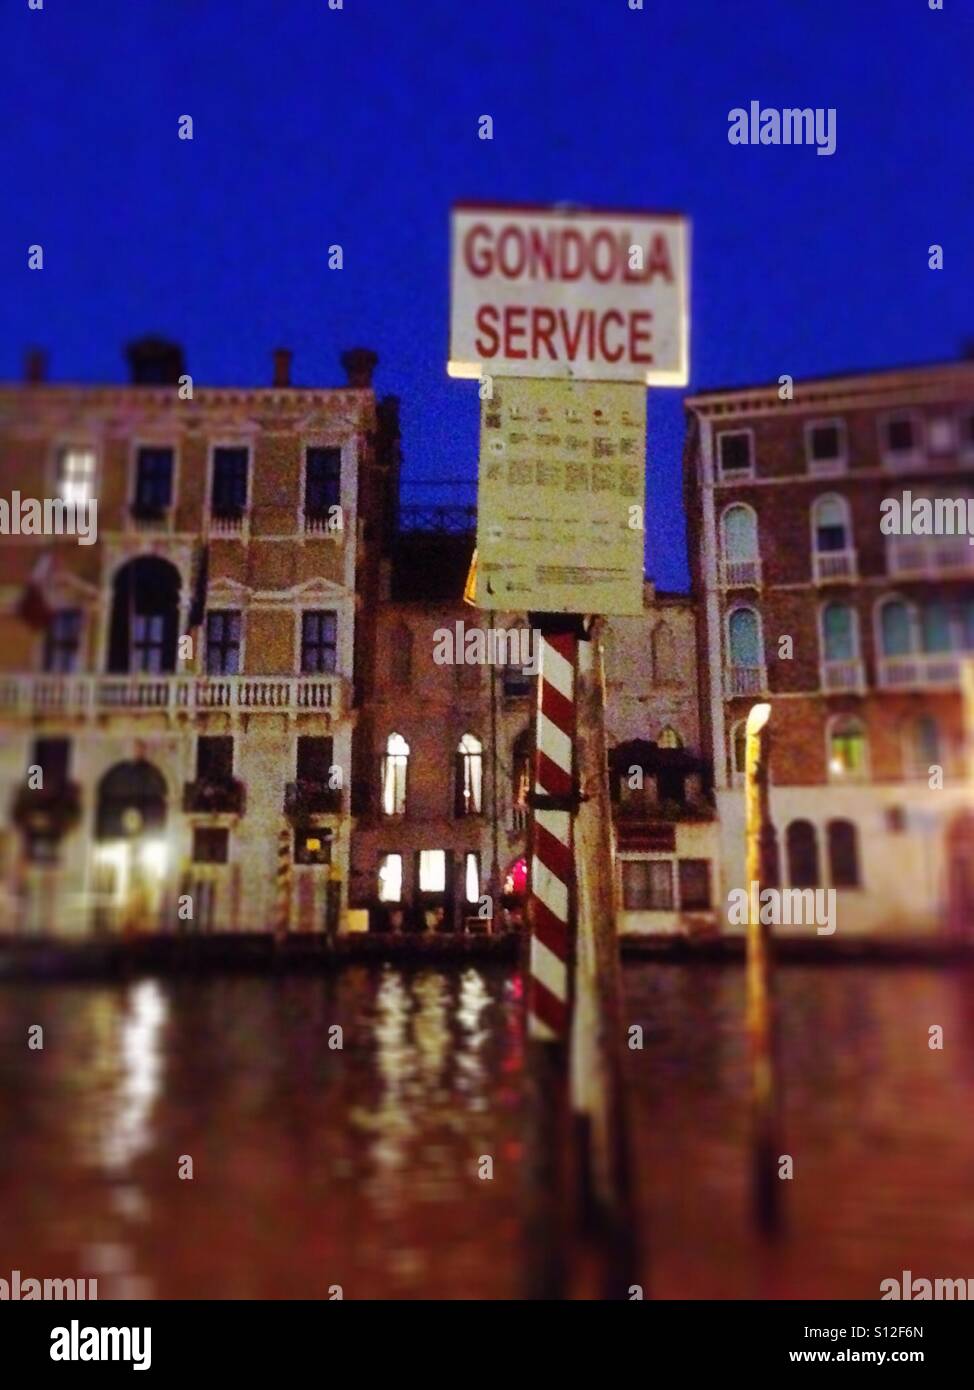 Gondola service stop: romance is never dead. Stock Photo